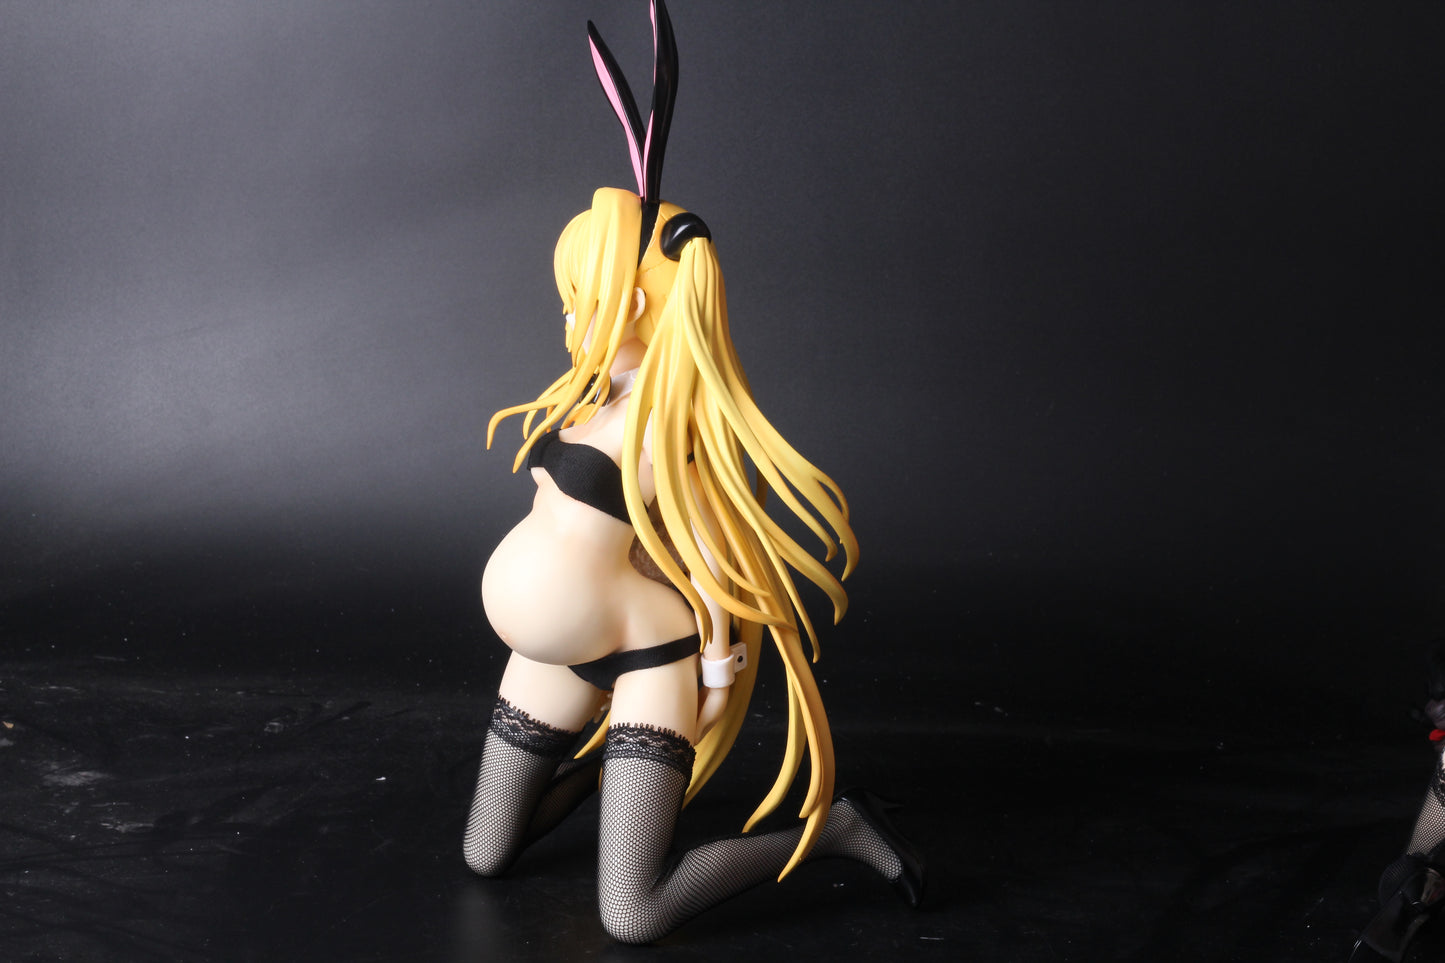 To Love-Ru Golden Darkness: Bunny 1/4 anime girl figure naked anime figures